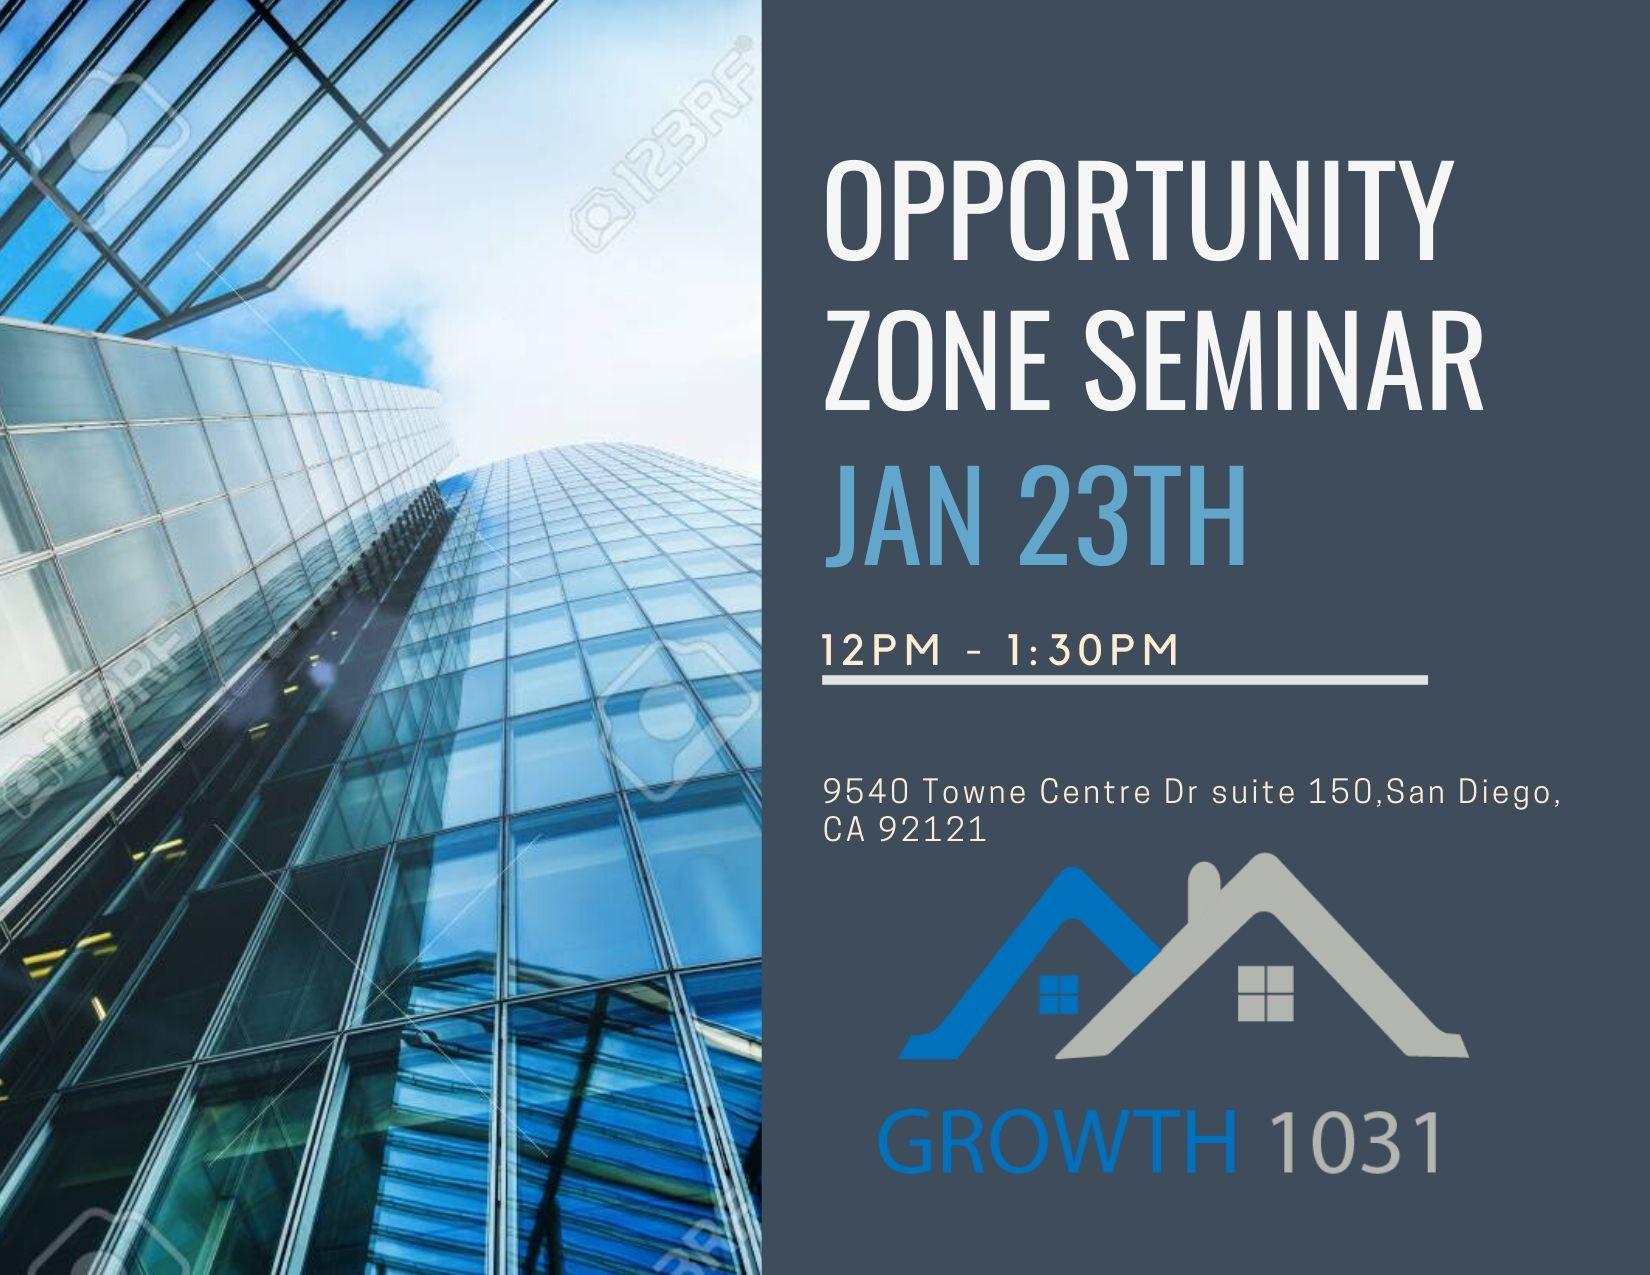 1031 Exchange & Opportunities within Opportunity Zones